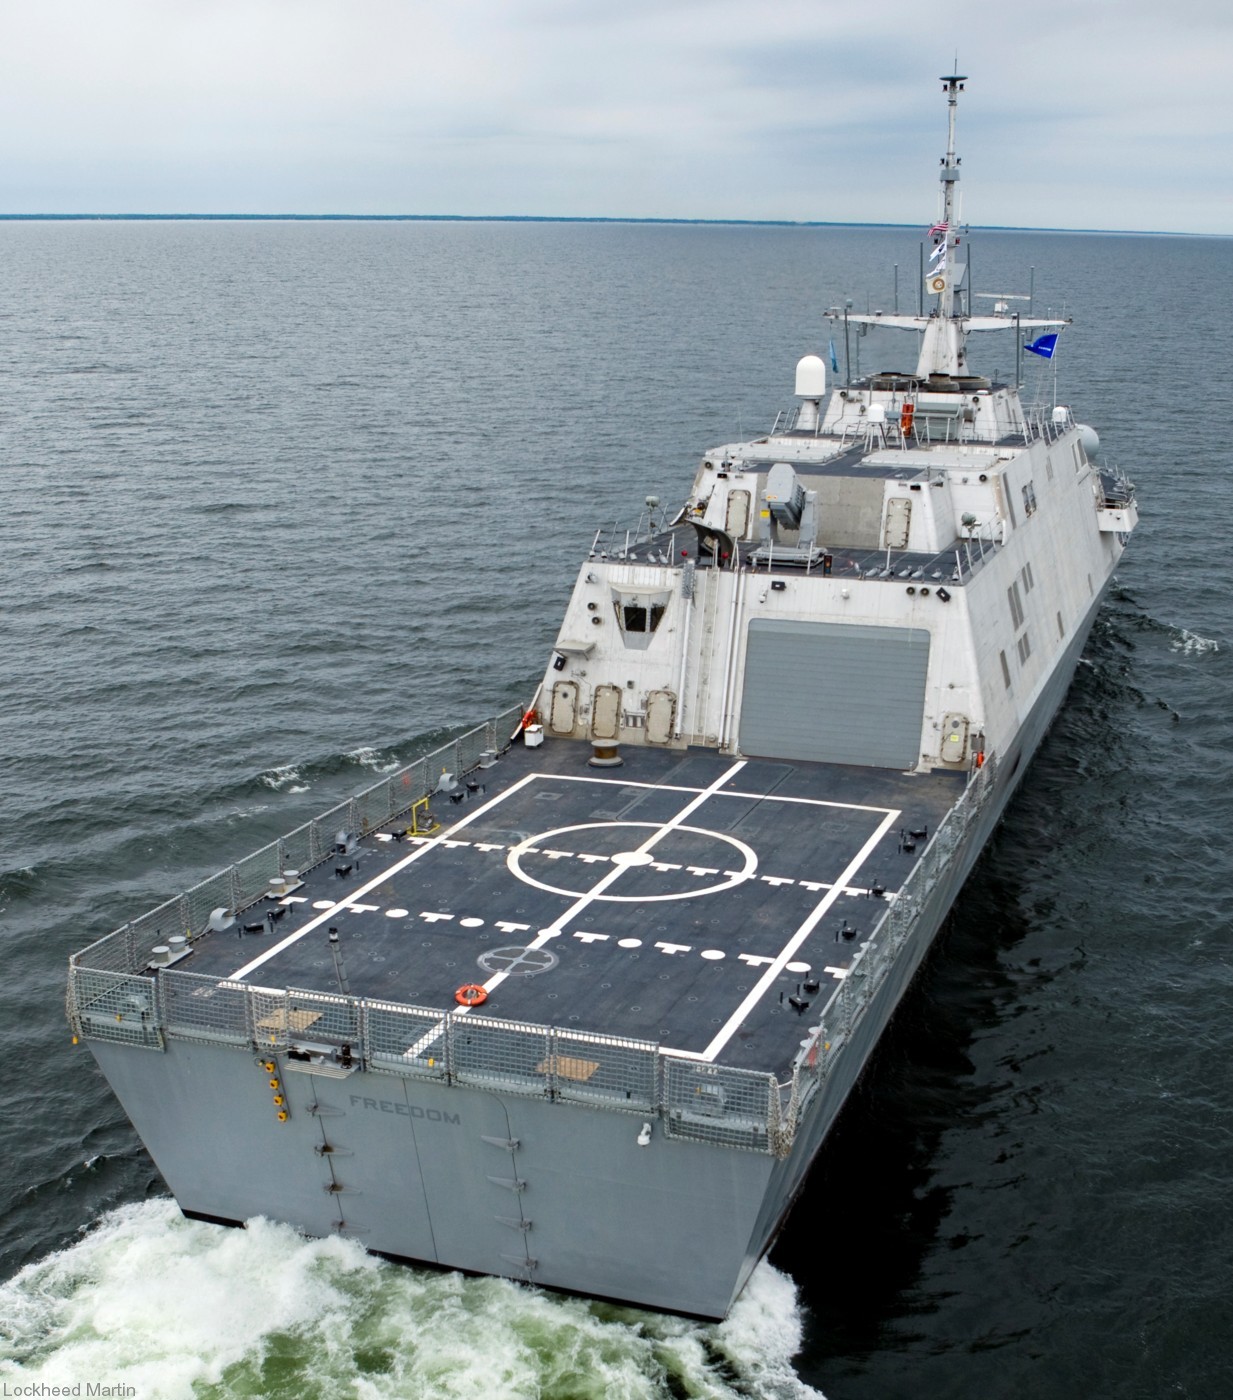 lcs-1 uss freedom class littoral combat ship us navy 137 lockheed martin